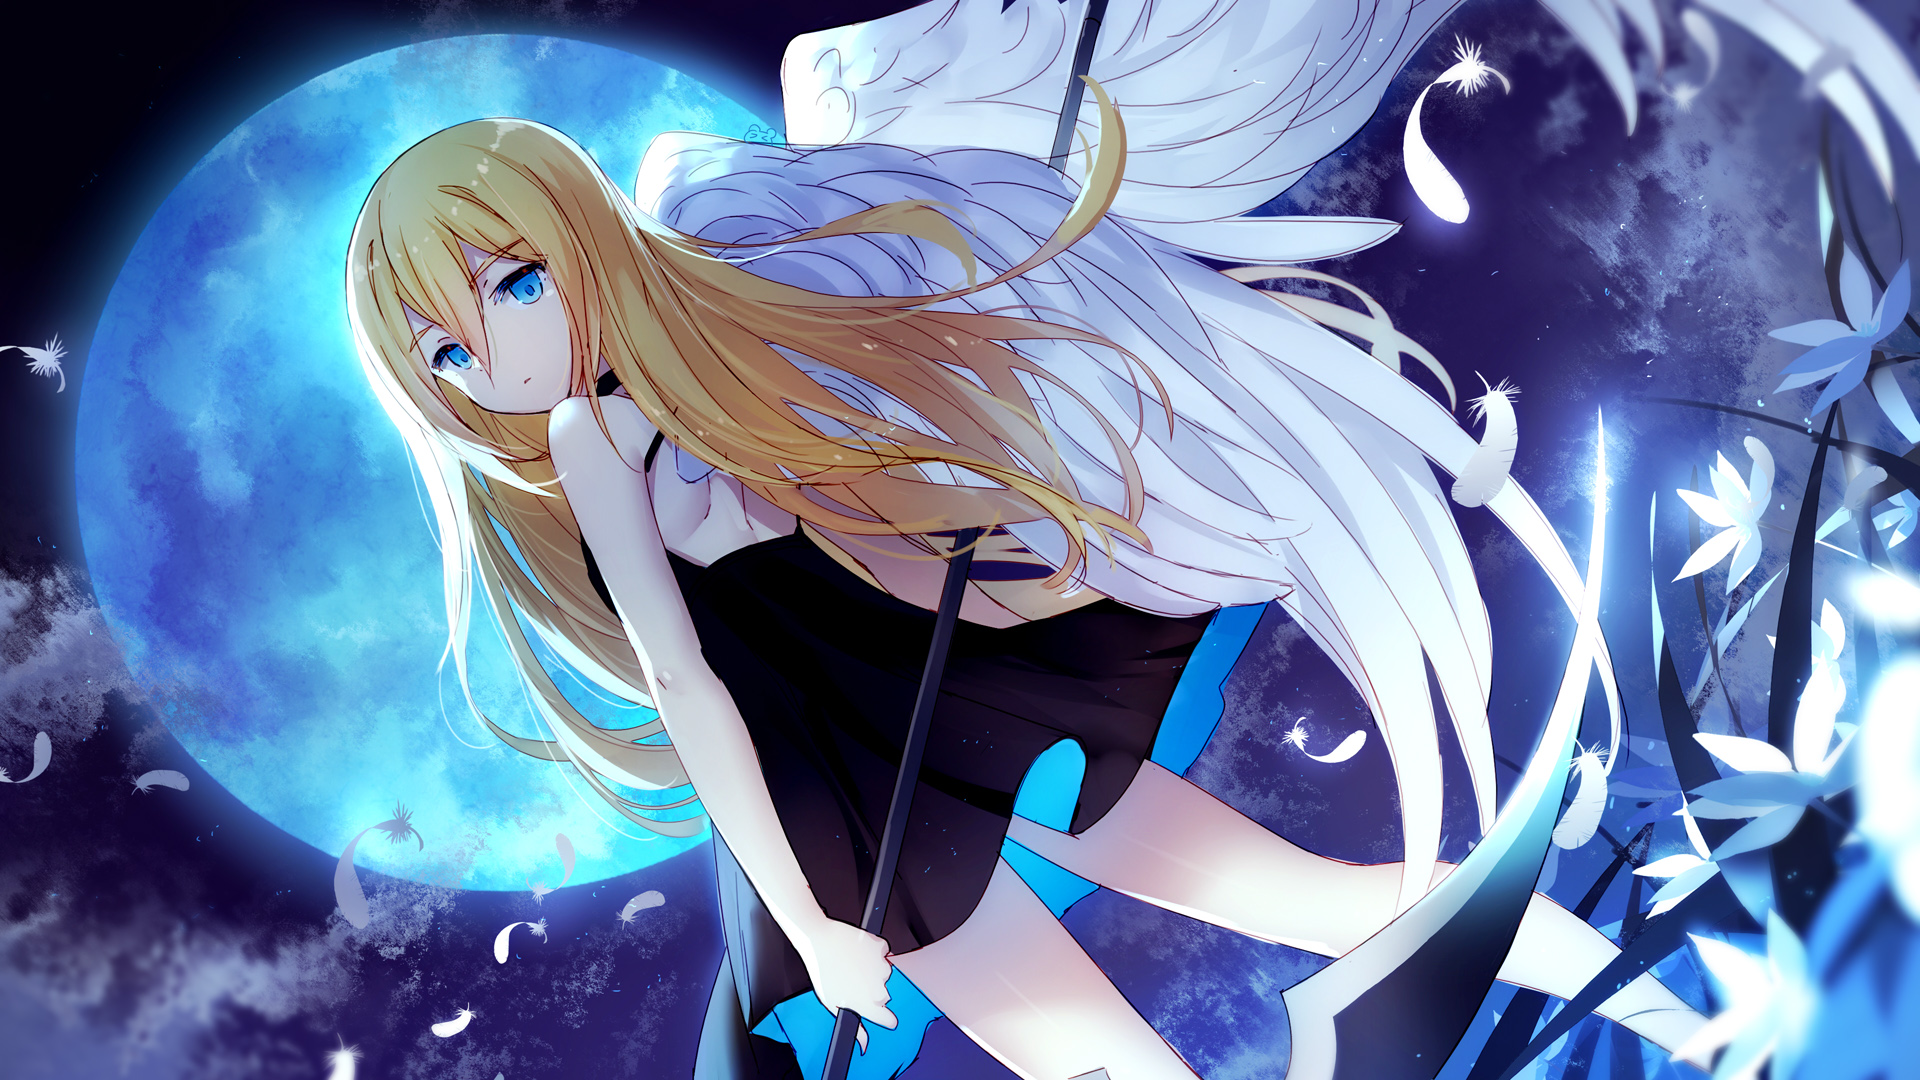 Rachel Gardner #1 - Anime & Manga  Anime, Angel of death, Anime images